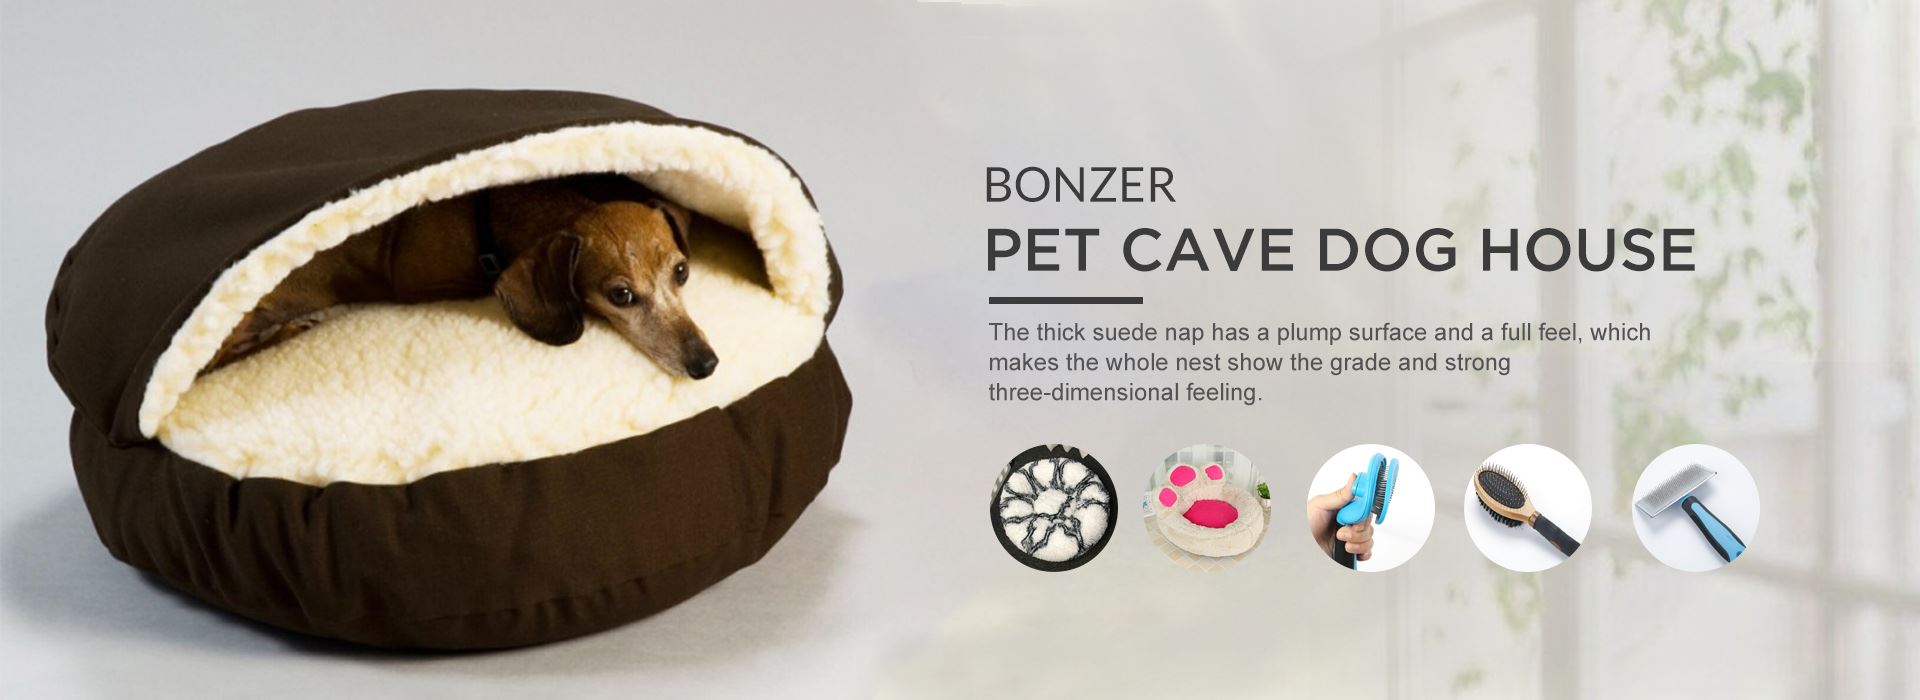 Bonzer Pet Co., Ltd